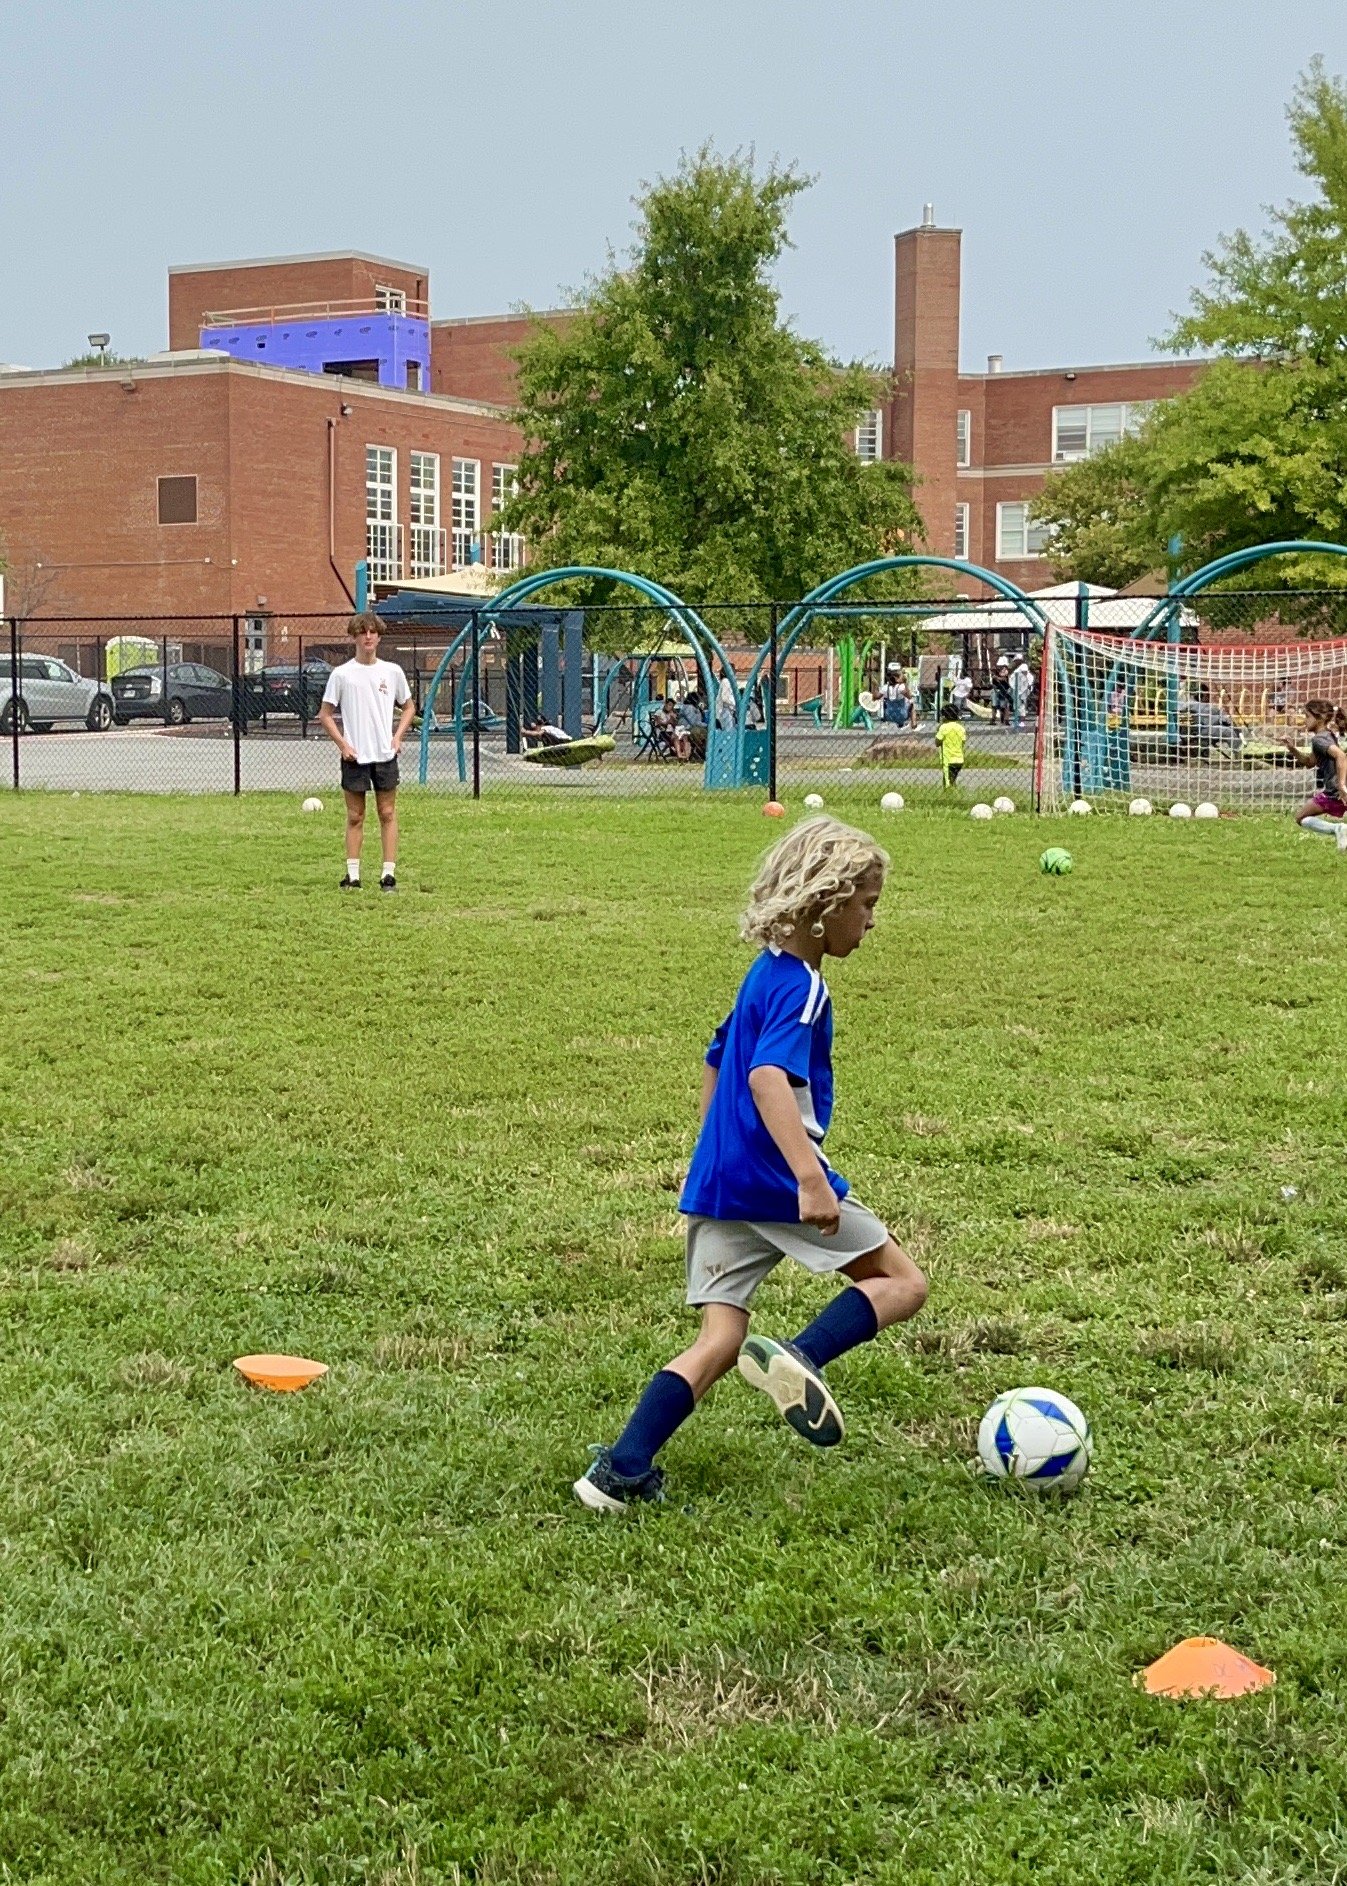 Dc-way-soccer-club-for-kids-in-washington-dc-summer-camp-at-tyler-elementary-school- 9205.JPG